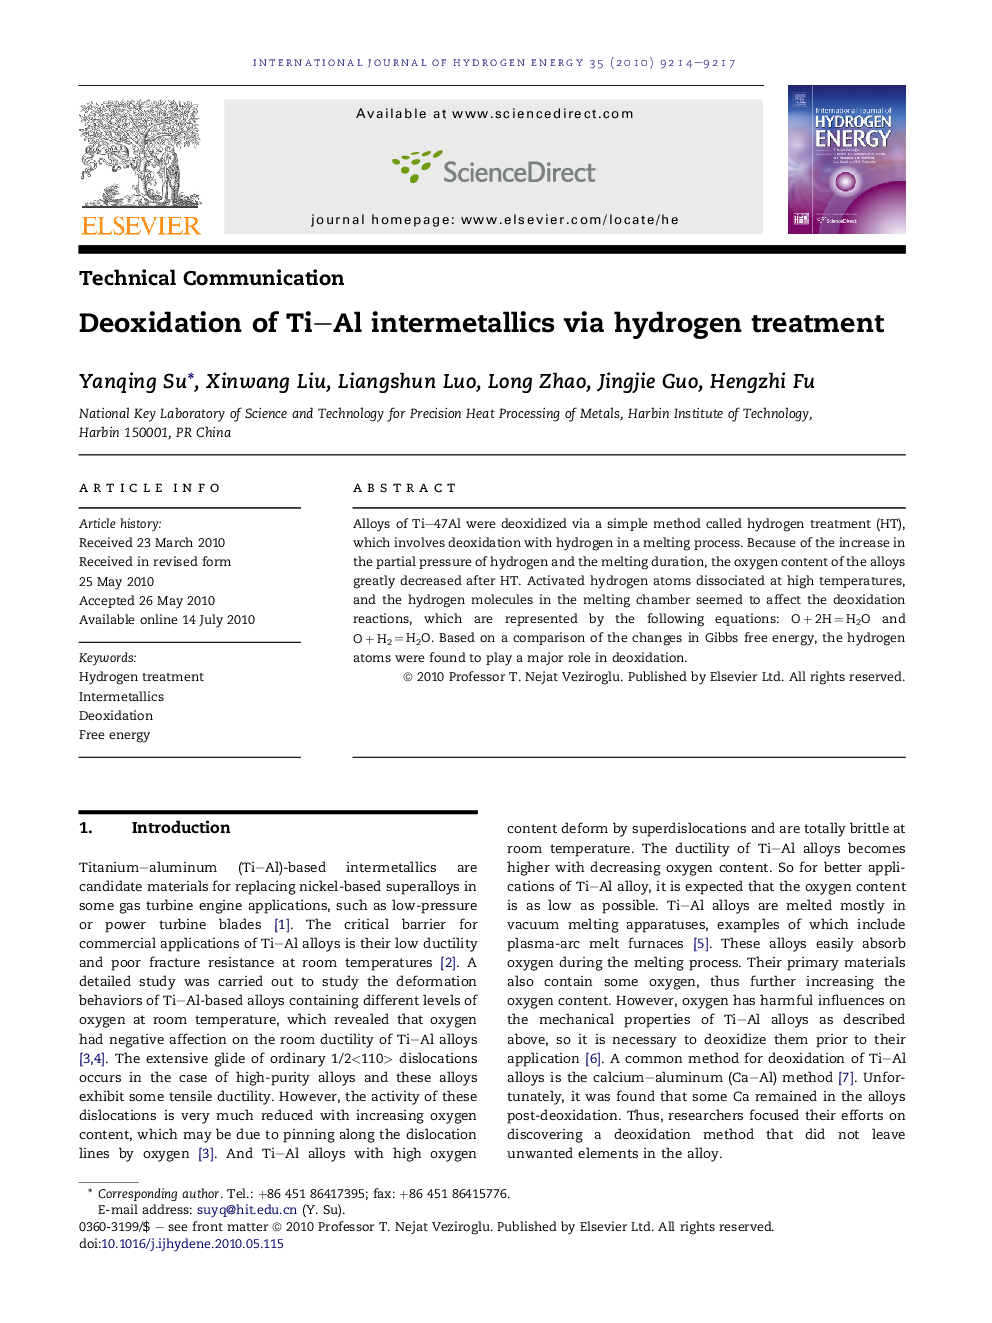 Deoxidation of Ti–Al intermetallics via hydrogen treatment